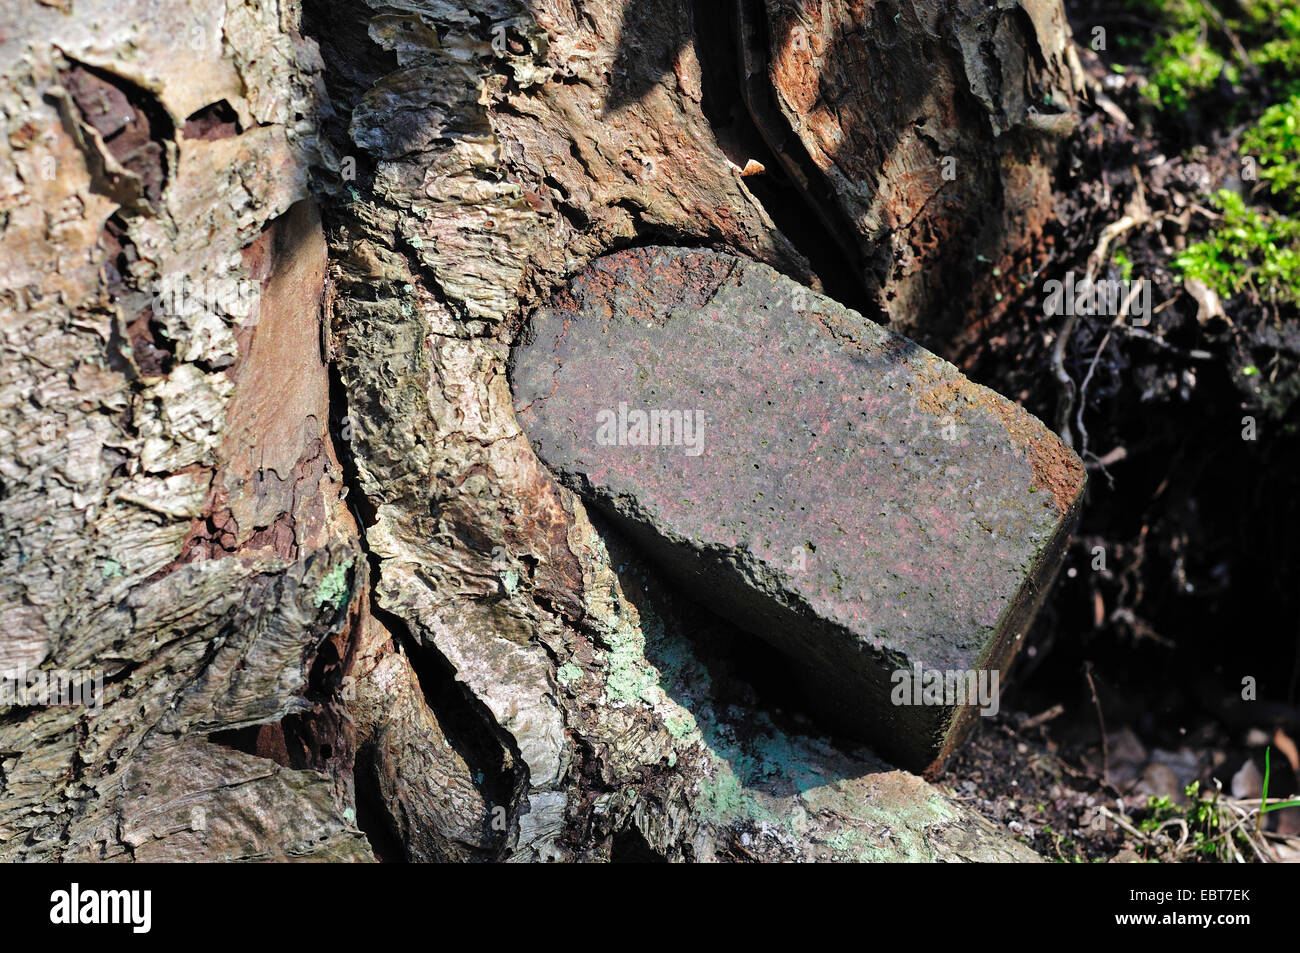 tree trunk with ingrown brick, Germany Stock Photo